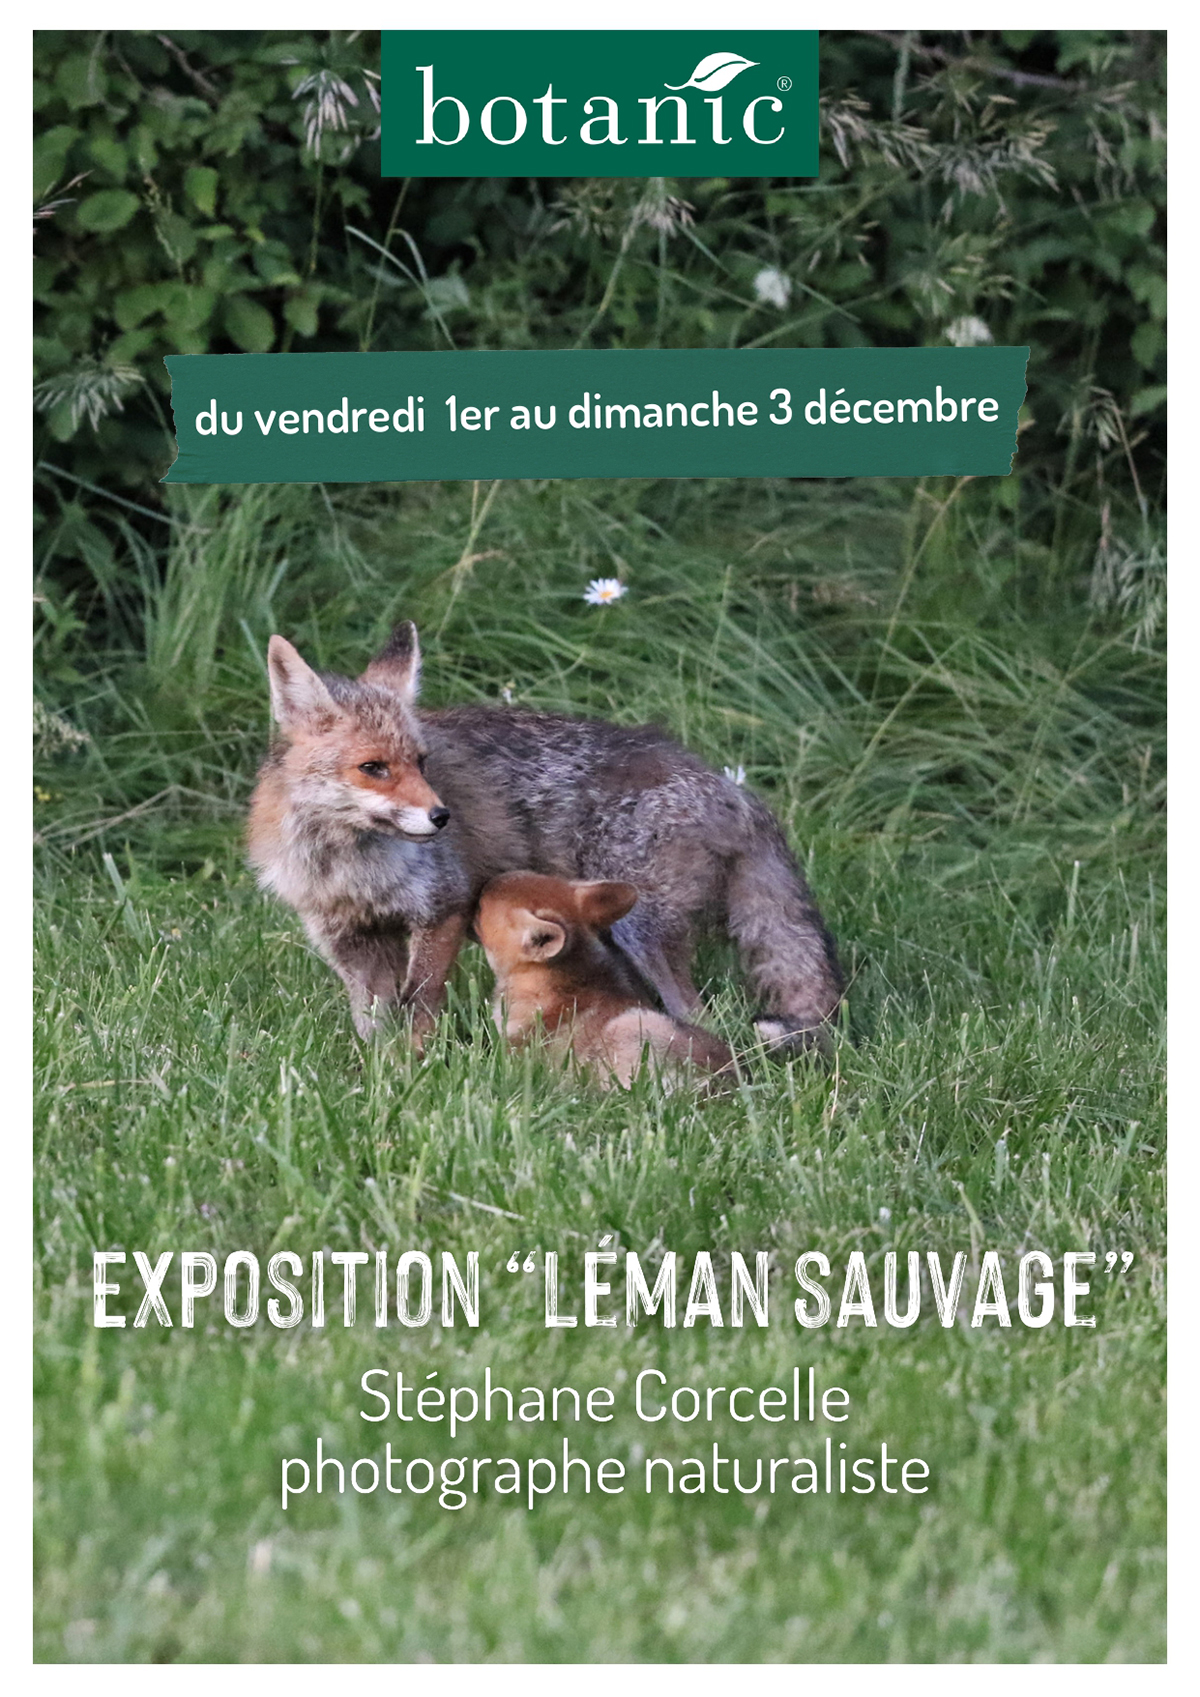 images/expos/expo-leman-sauvage-botanic.jpg